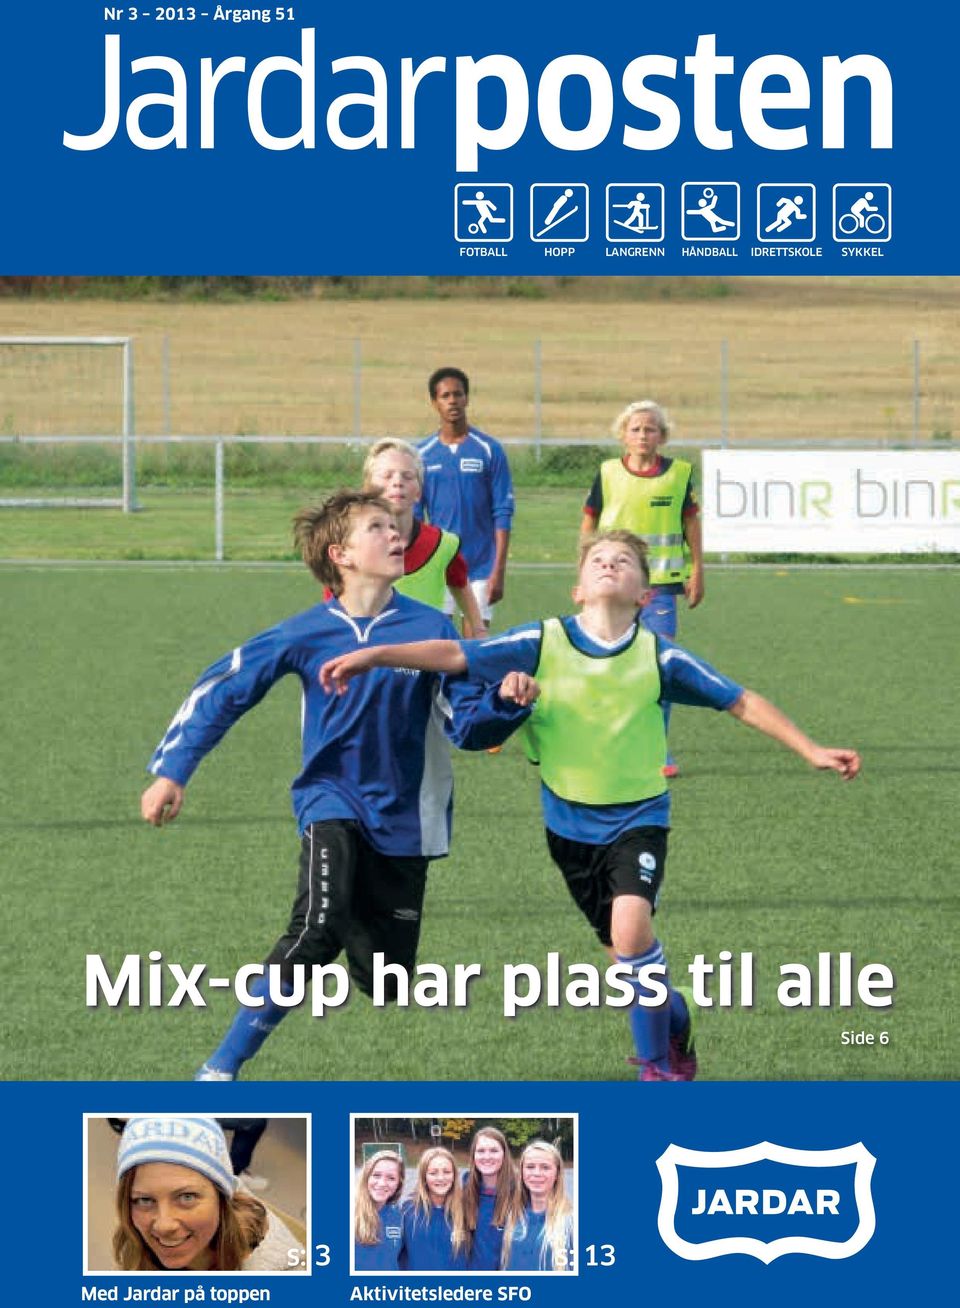 Jardarposten. Mix-cup har plass til alle. s: 13. s: 3. Aktivitetsledere  SFO. Med Jardar på toppen. Nr Årgang 51. Side 6 - PDF Gratis nedlasting